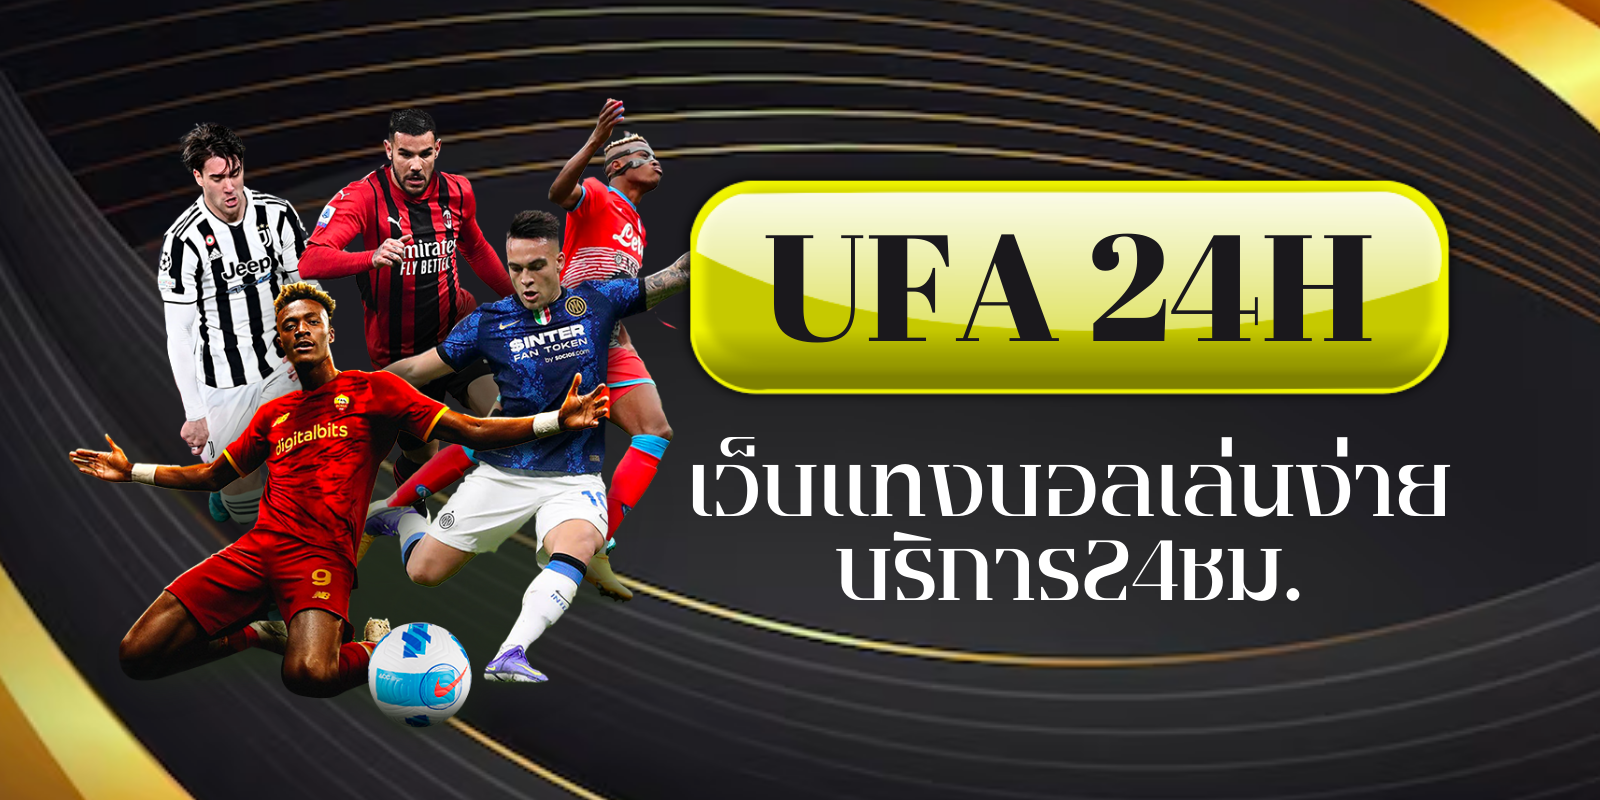 ufa 24h เว็บแทงบอลเล่นง่าย บริการ24ชม.